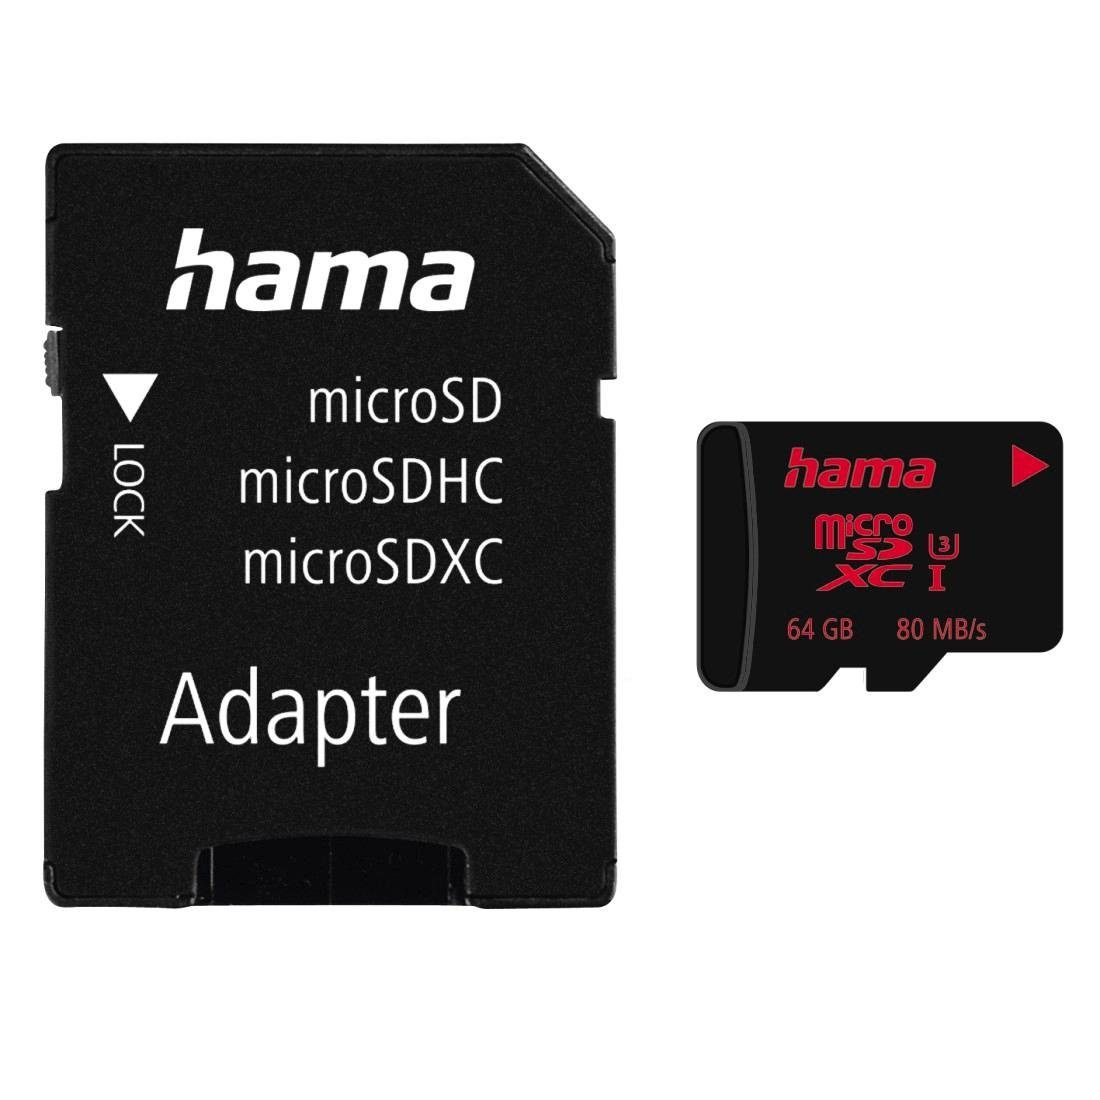 Hama microSDHC 16GB UHS Speed Class 3 UHS-I 80MB/s + Adapter/Foto Speicherkarte (64 GB, UHS Class 3, 80 MB/s Lesegeschwindigkeit)